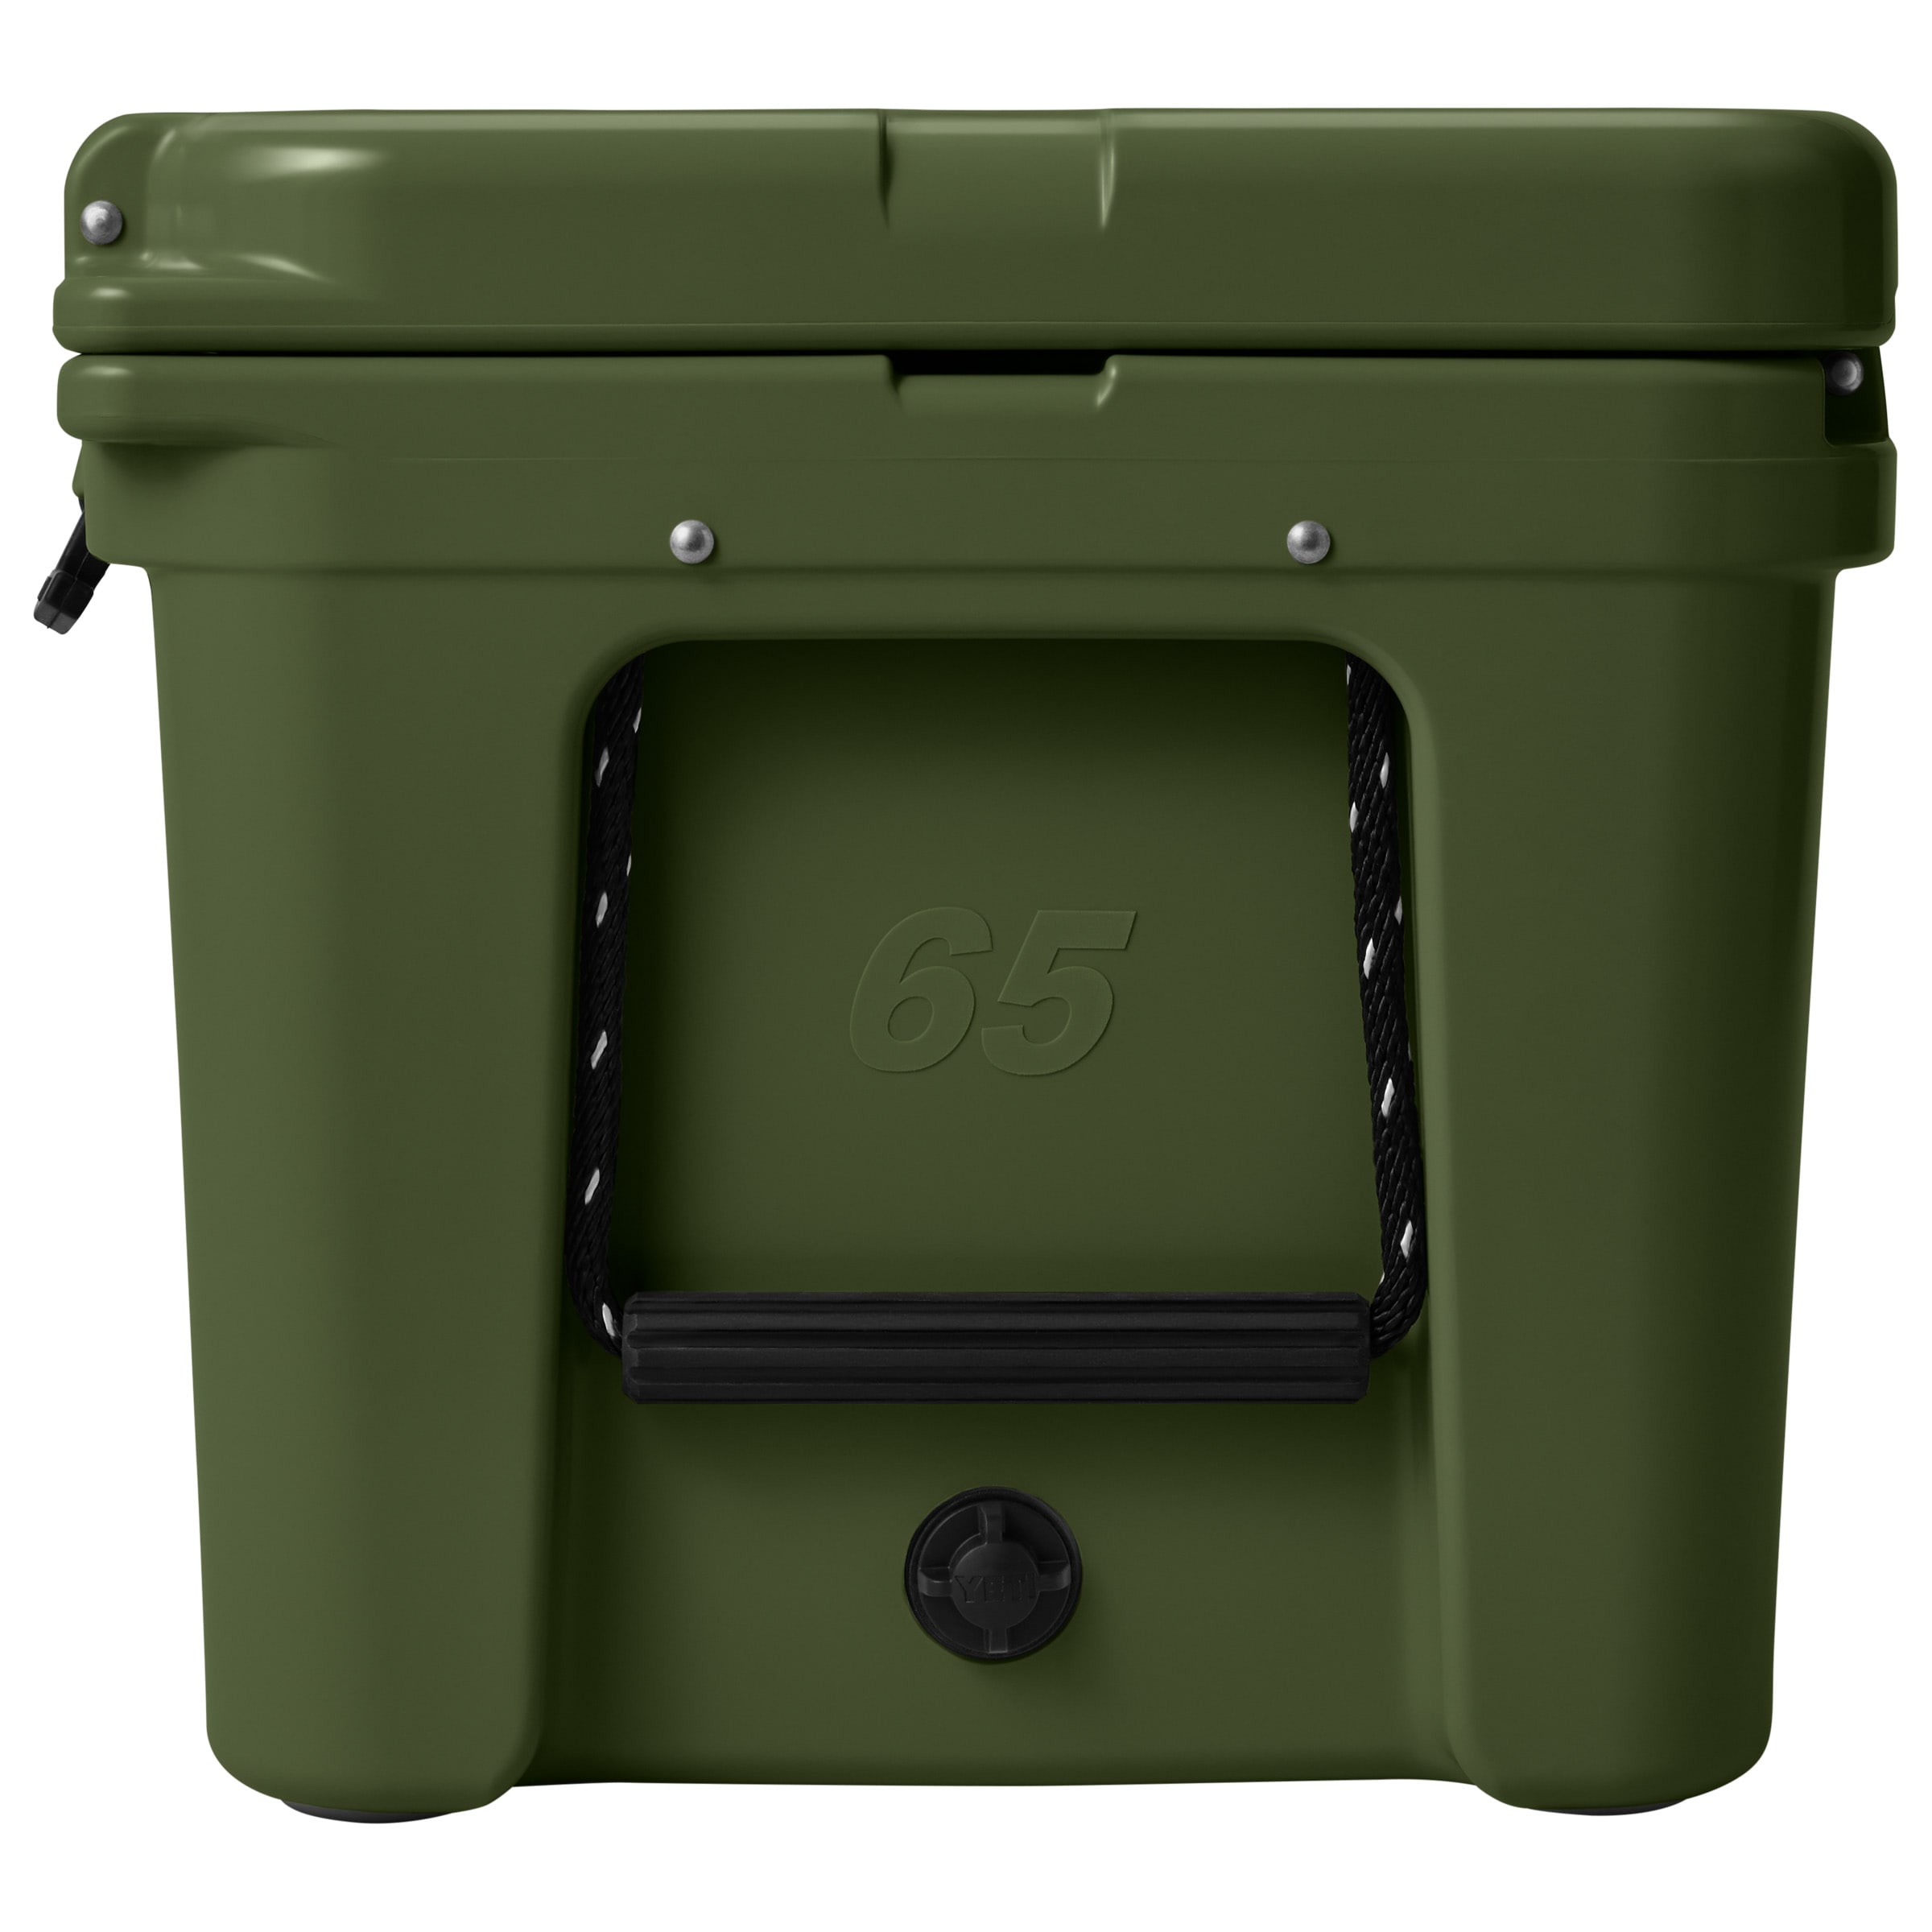 Yeti Tundra 65, 42-Can Cooler, Tan - Groom & Sons' Hardware